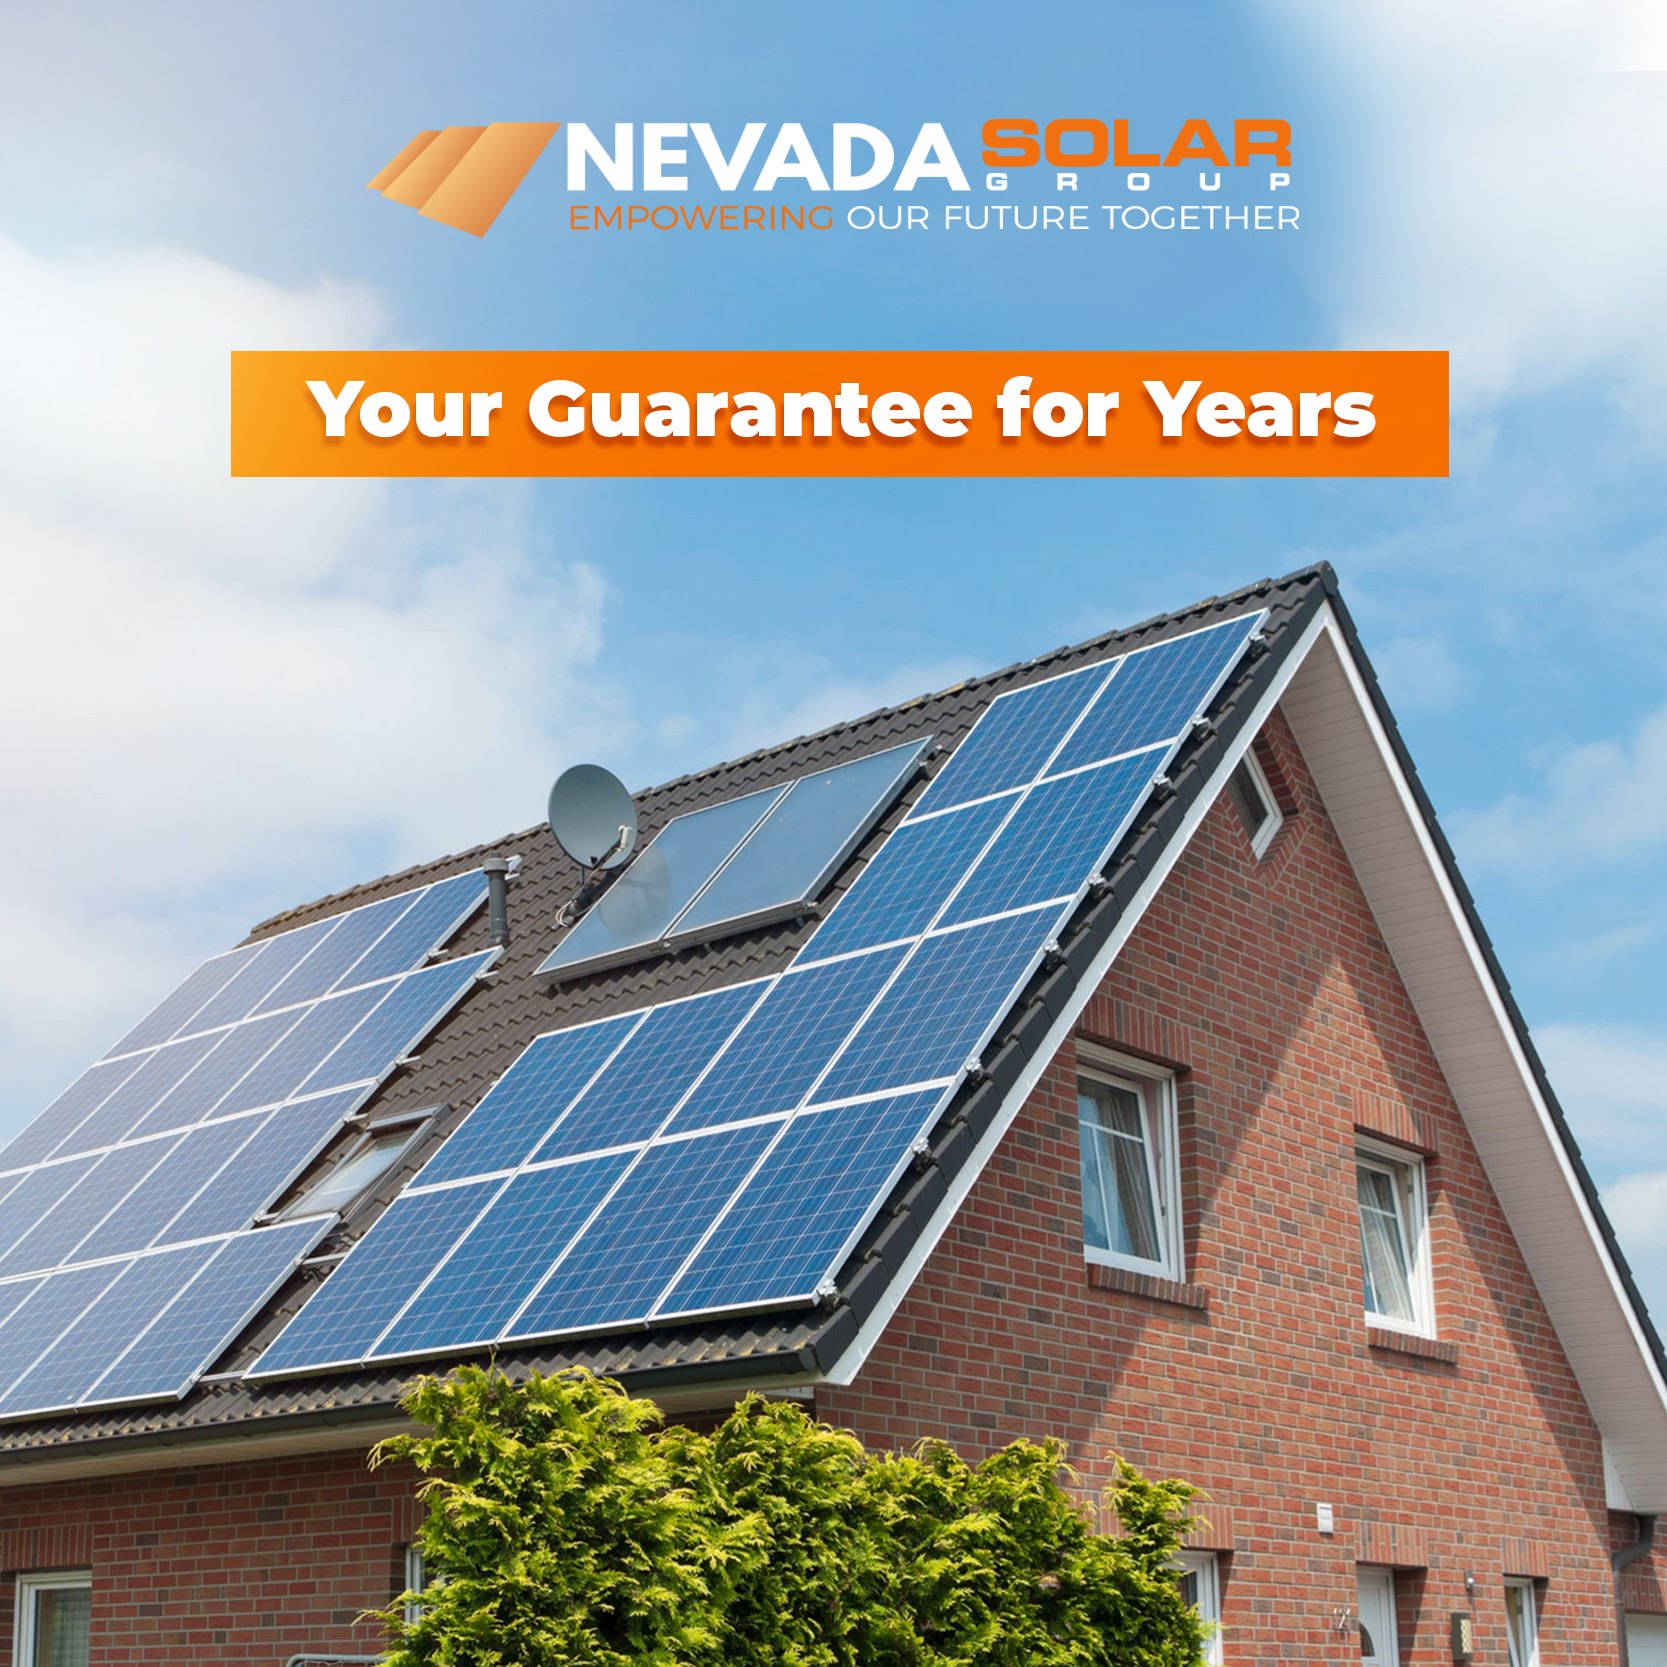 Nevada Solar Group supplied photo